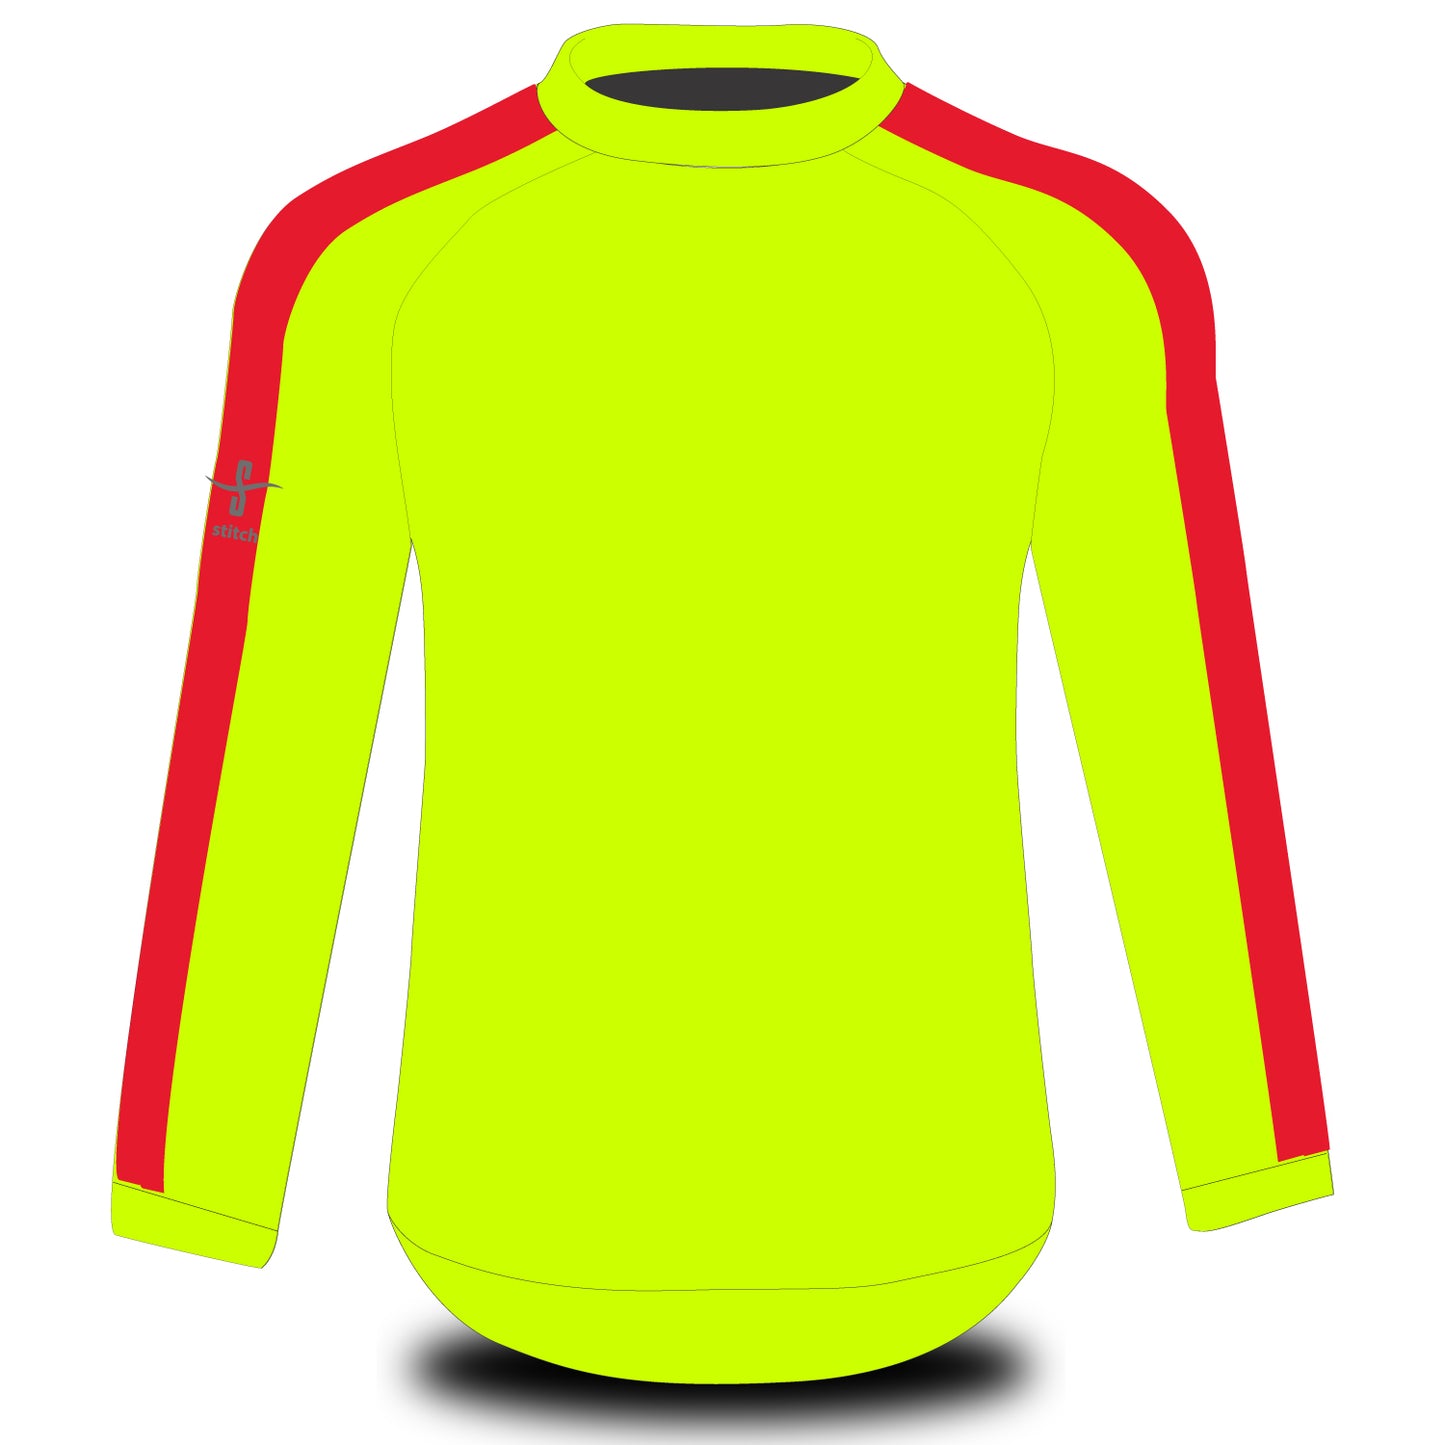 Bradford on Avon Rowing Club Fluorescent Yellow Tech Top Long Sleeve